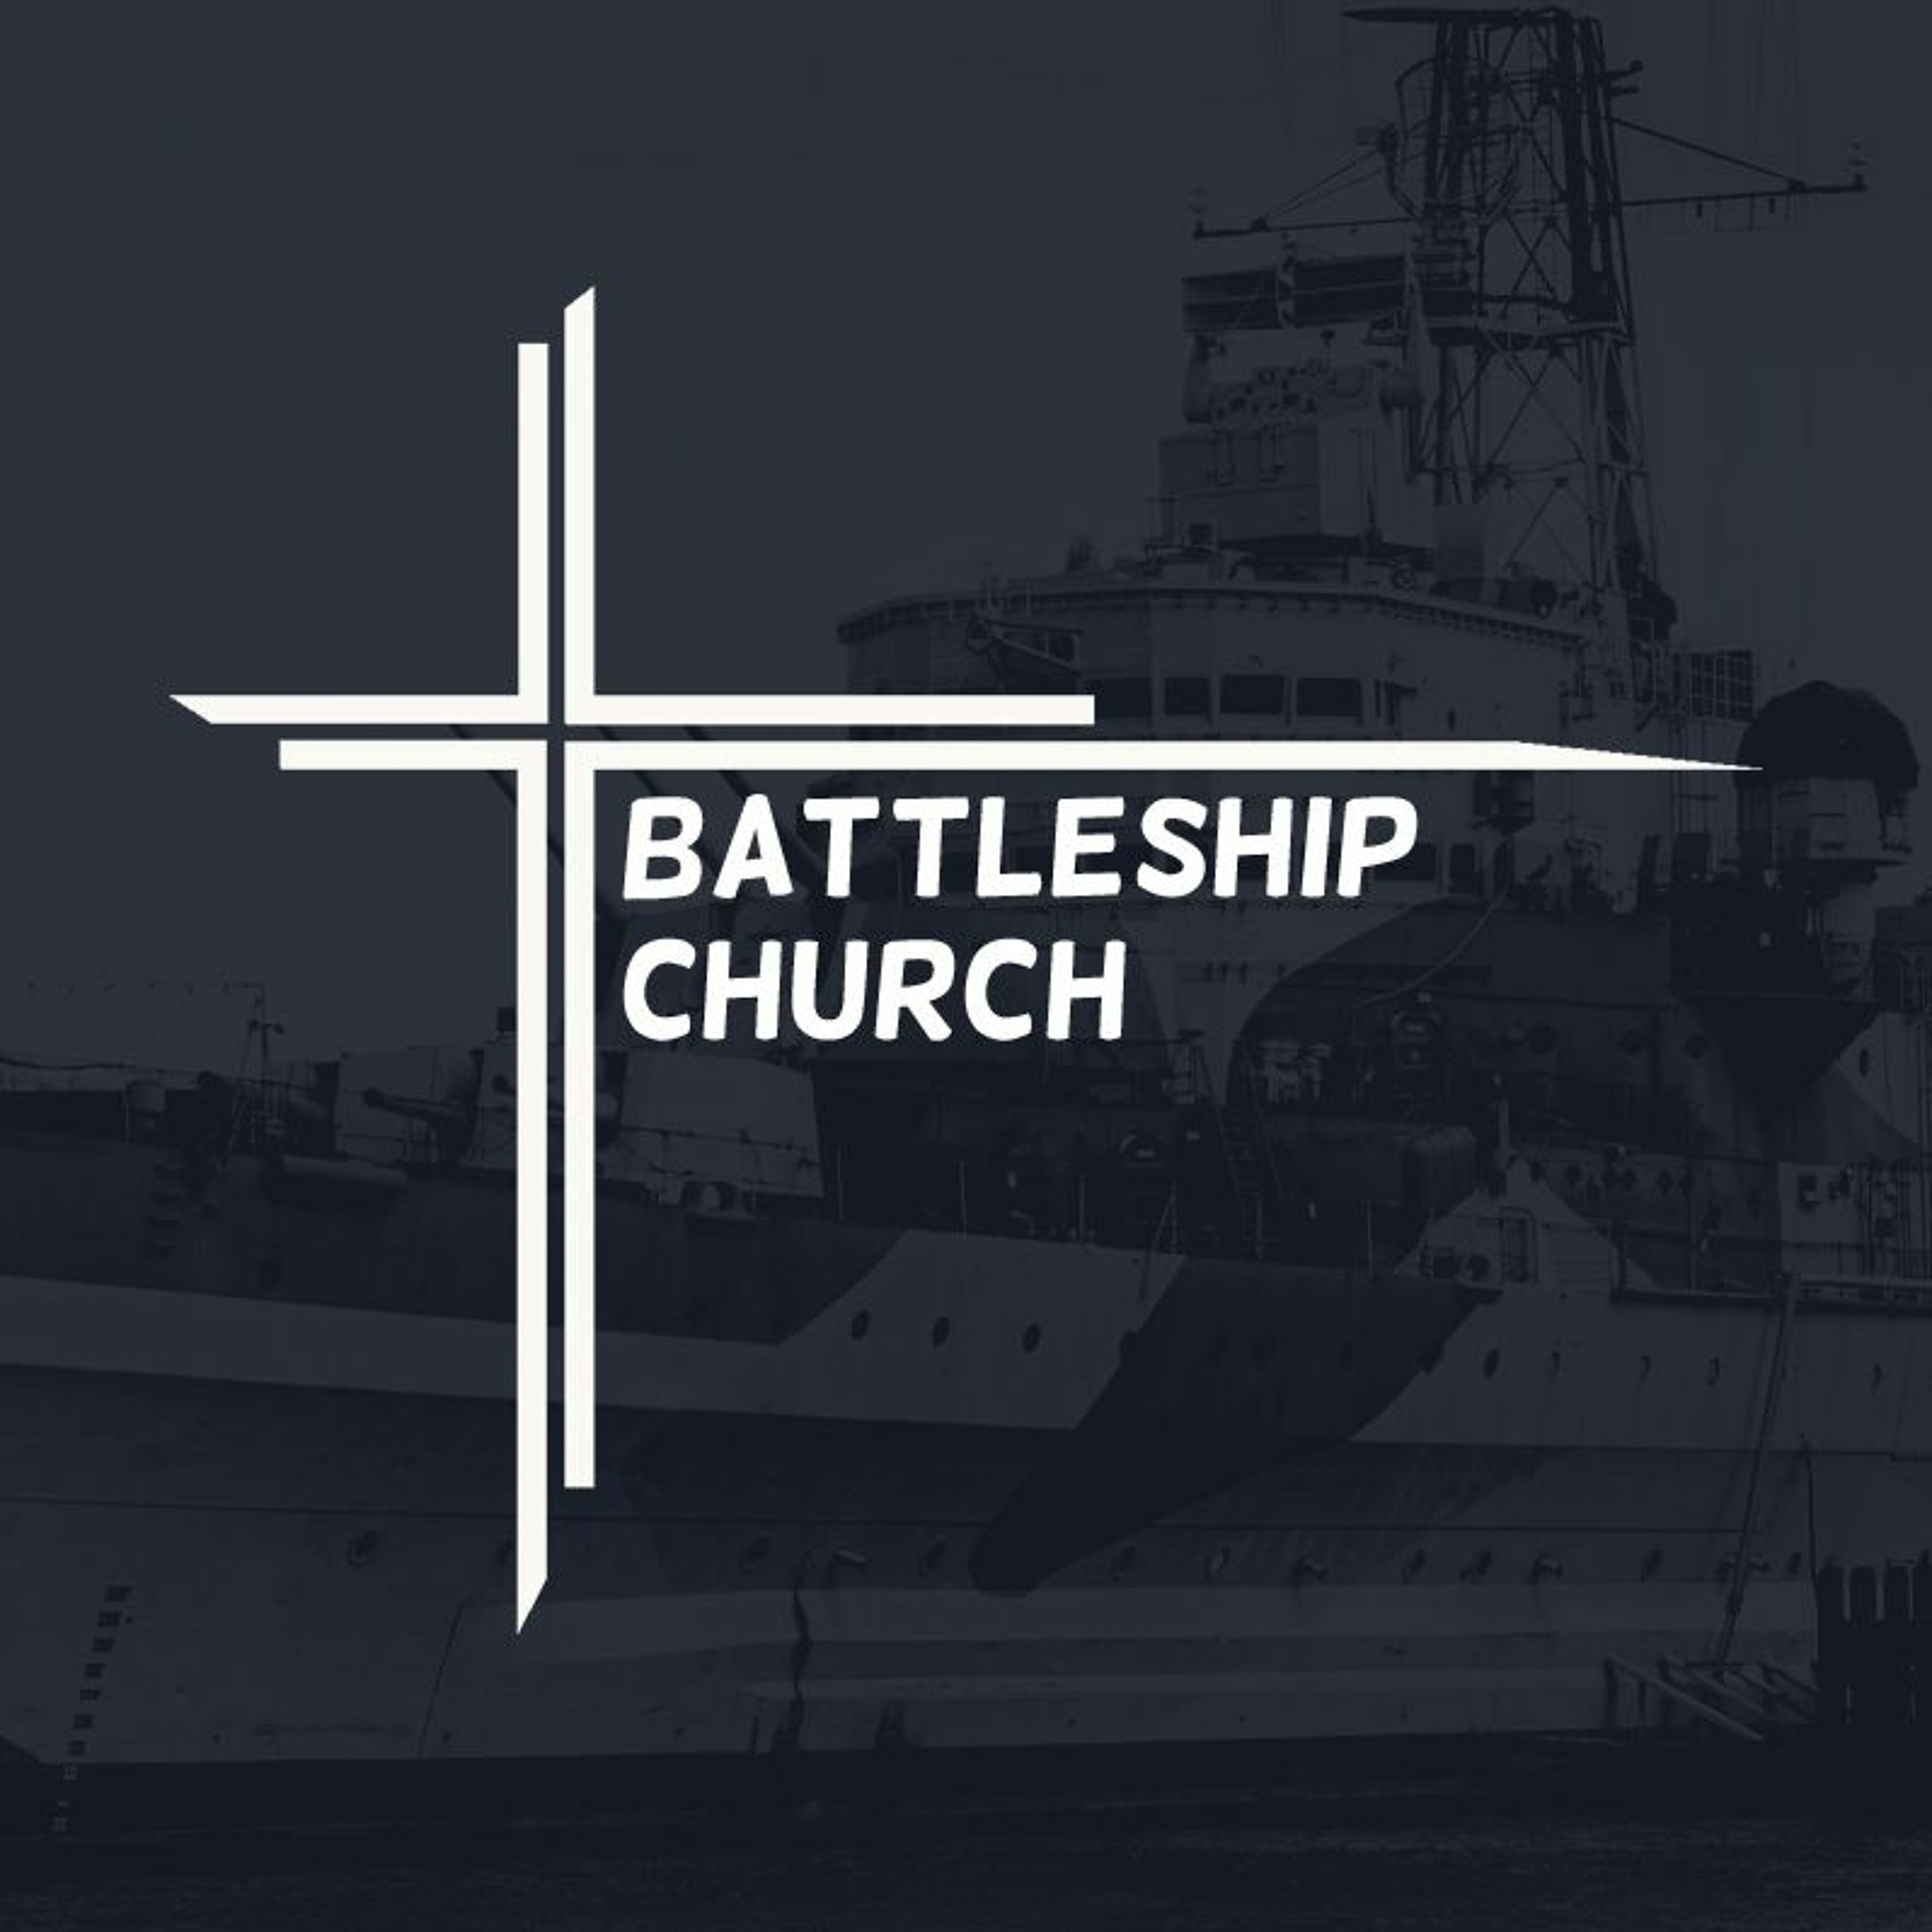 Battleship church | Fellowship